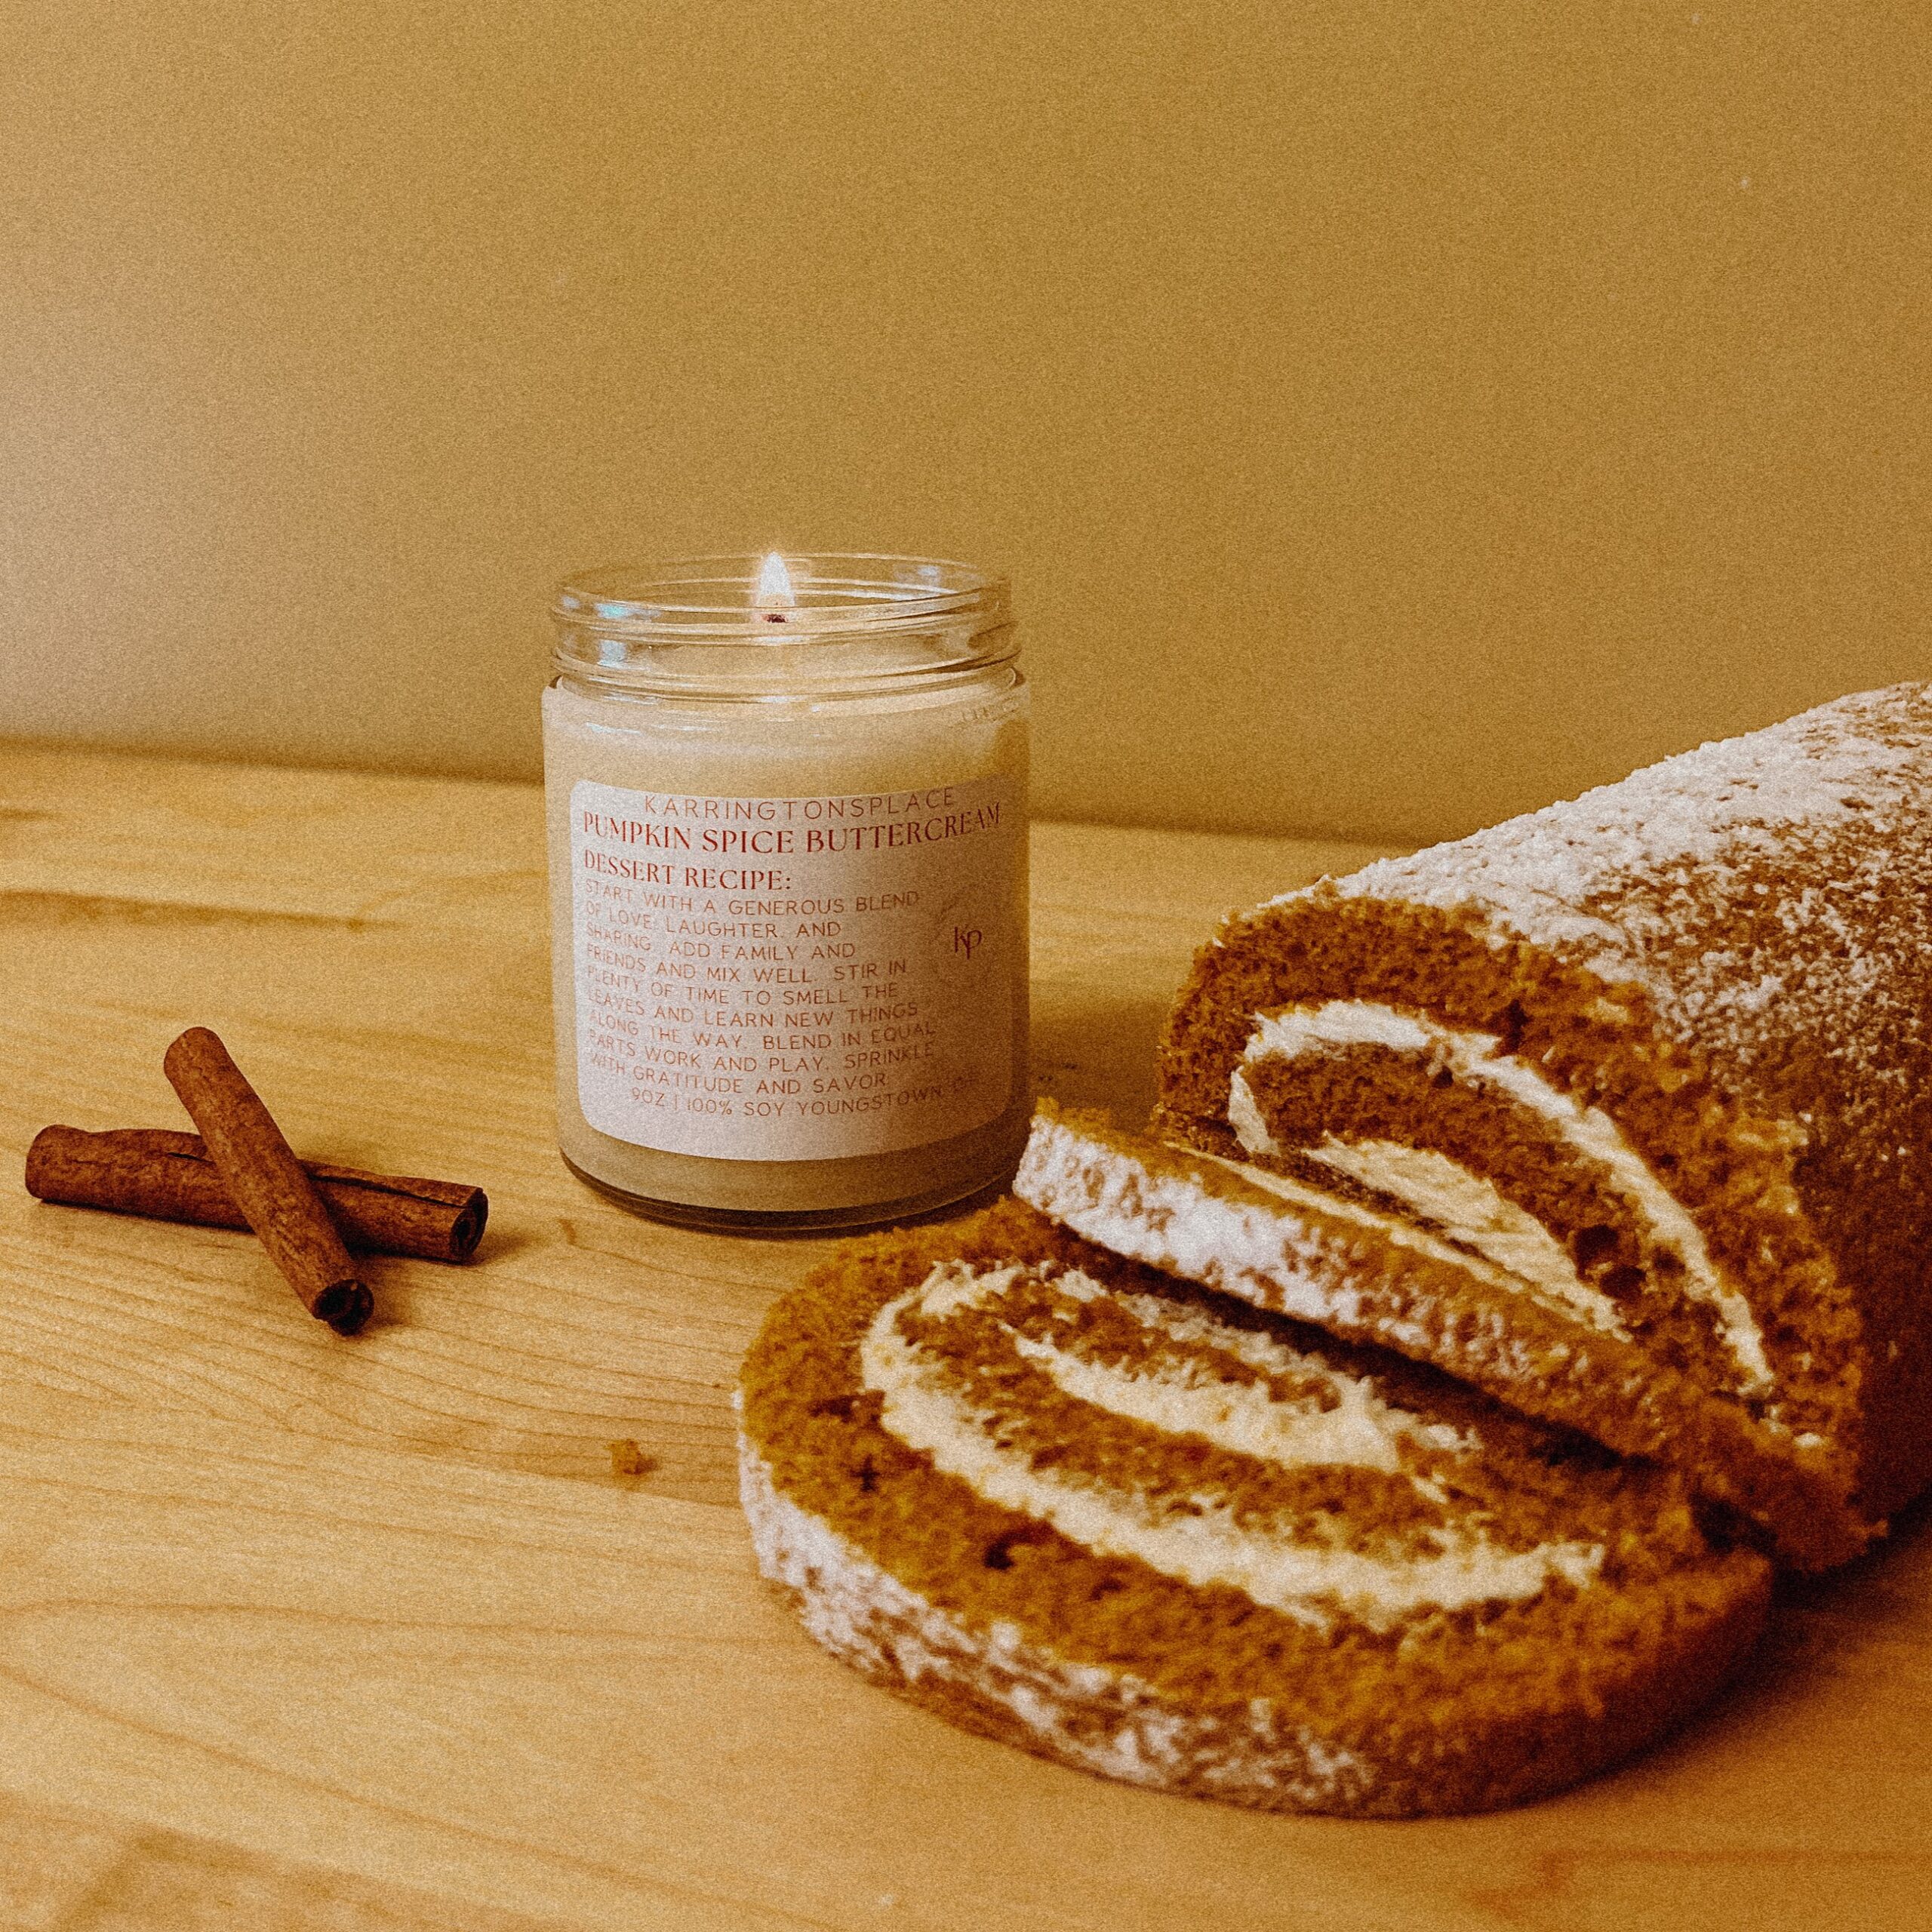 A photo of a Karrington's Place pumpkin spice buttercream candle next to pumpkin swirl bread and cinnamon sticks.